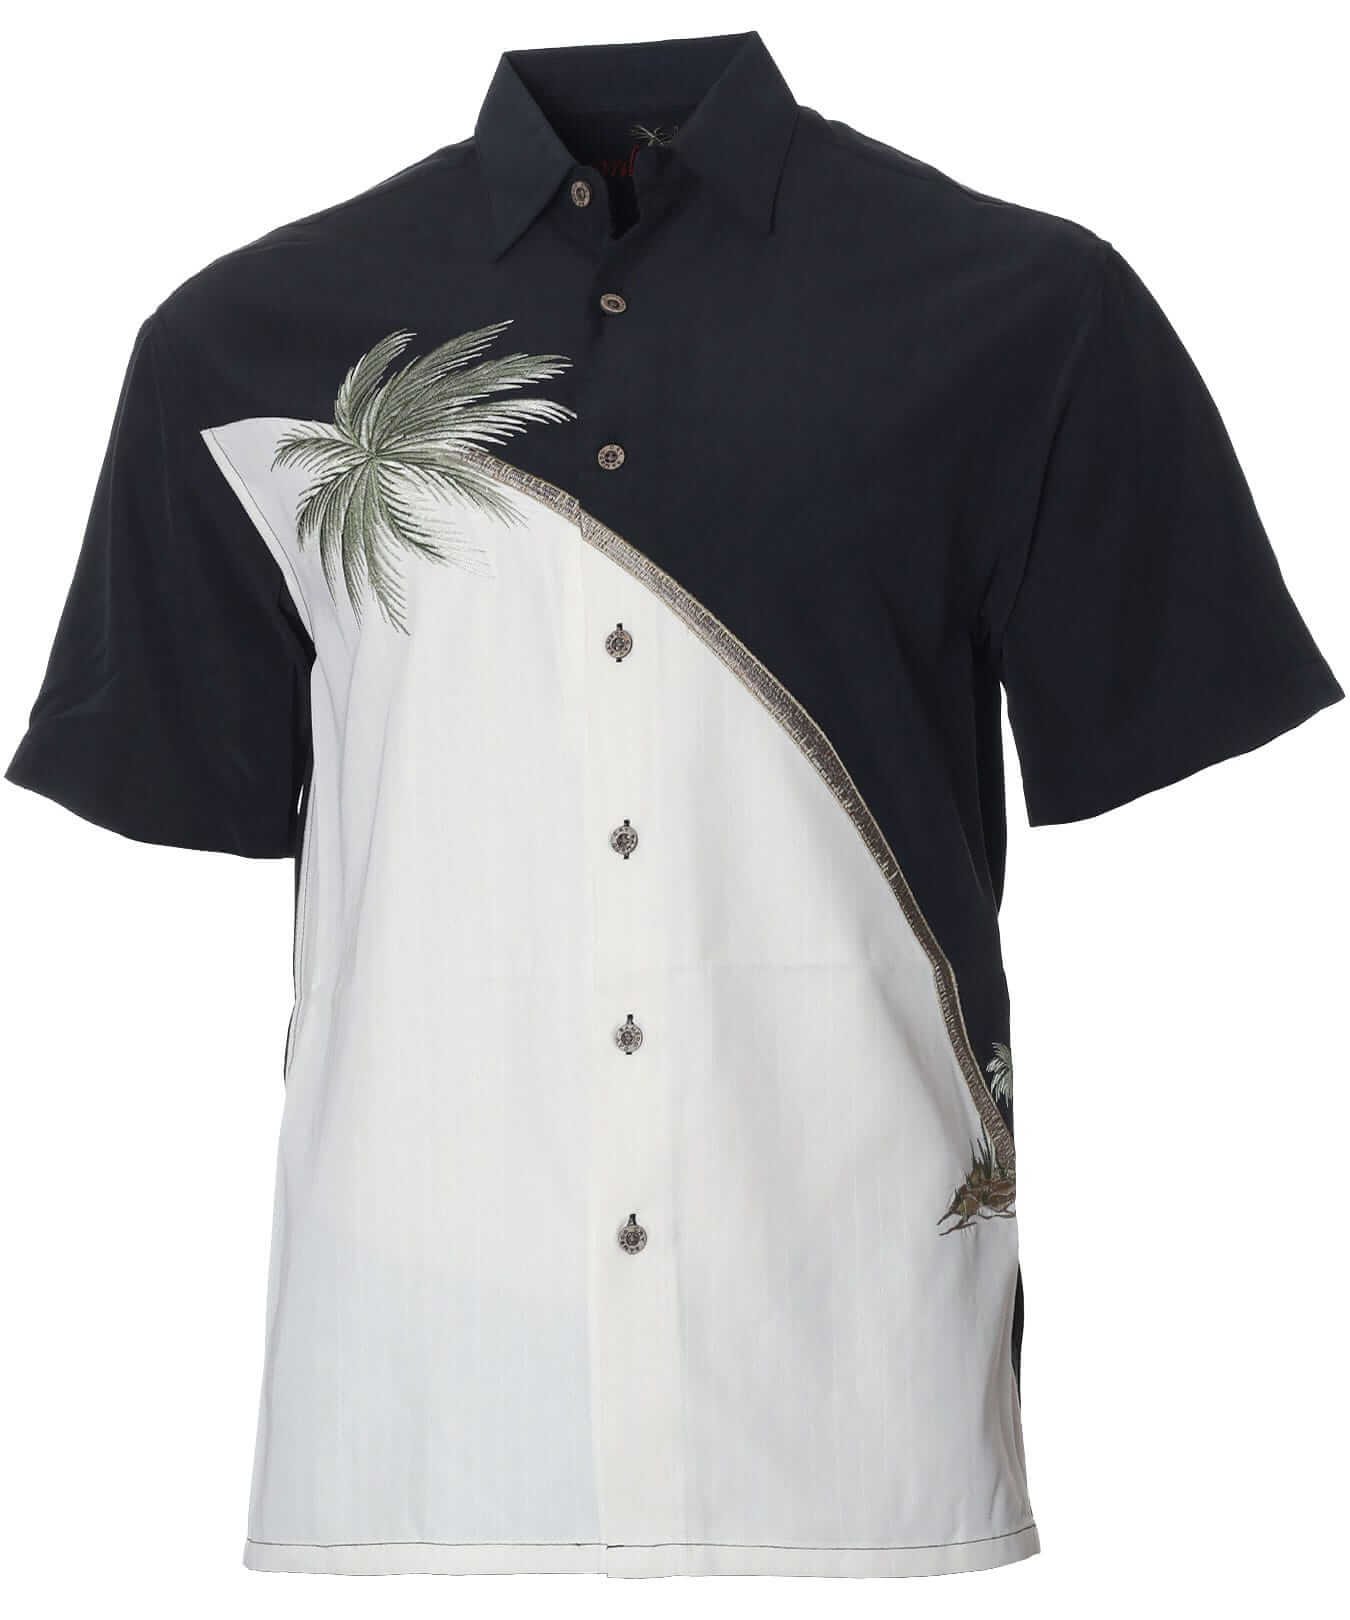 Elegant Palms Bamboo Cay Modal Men's Shirt Black